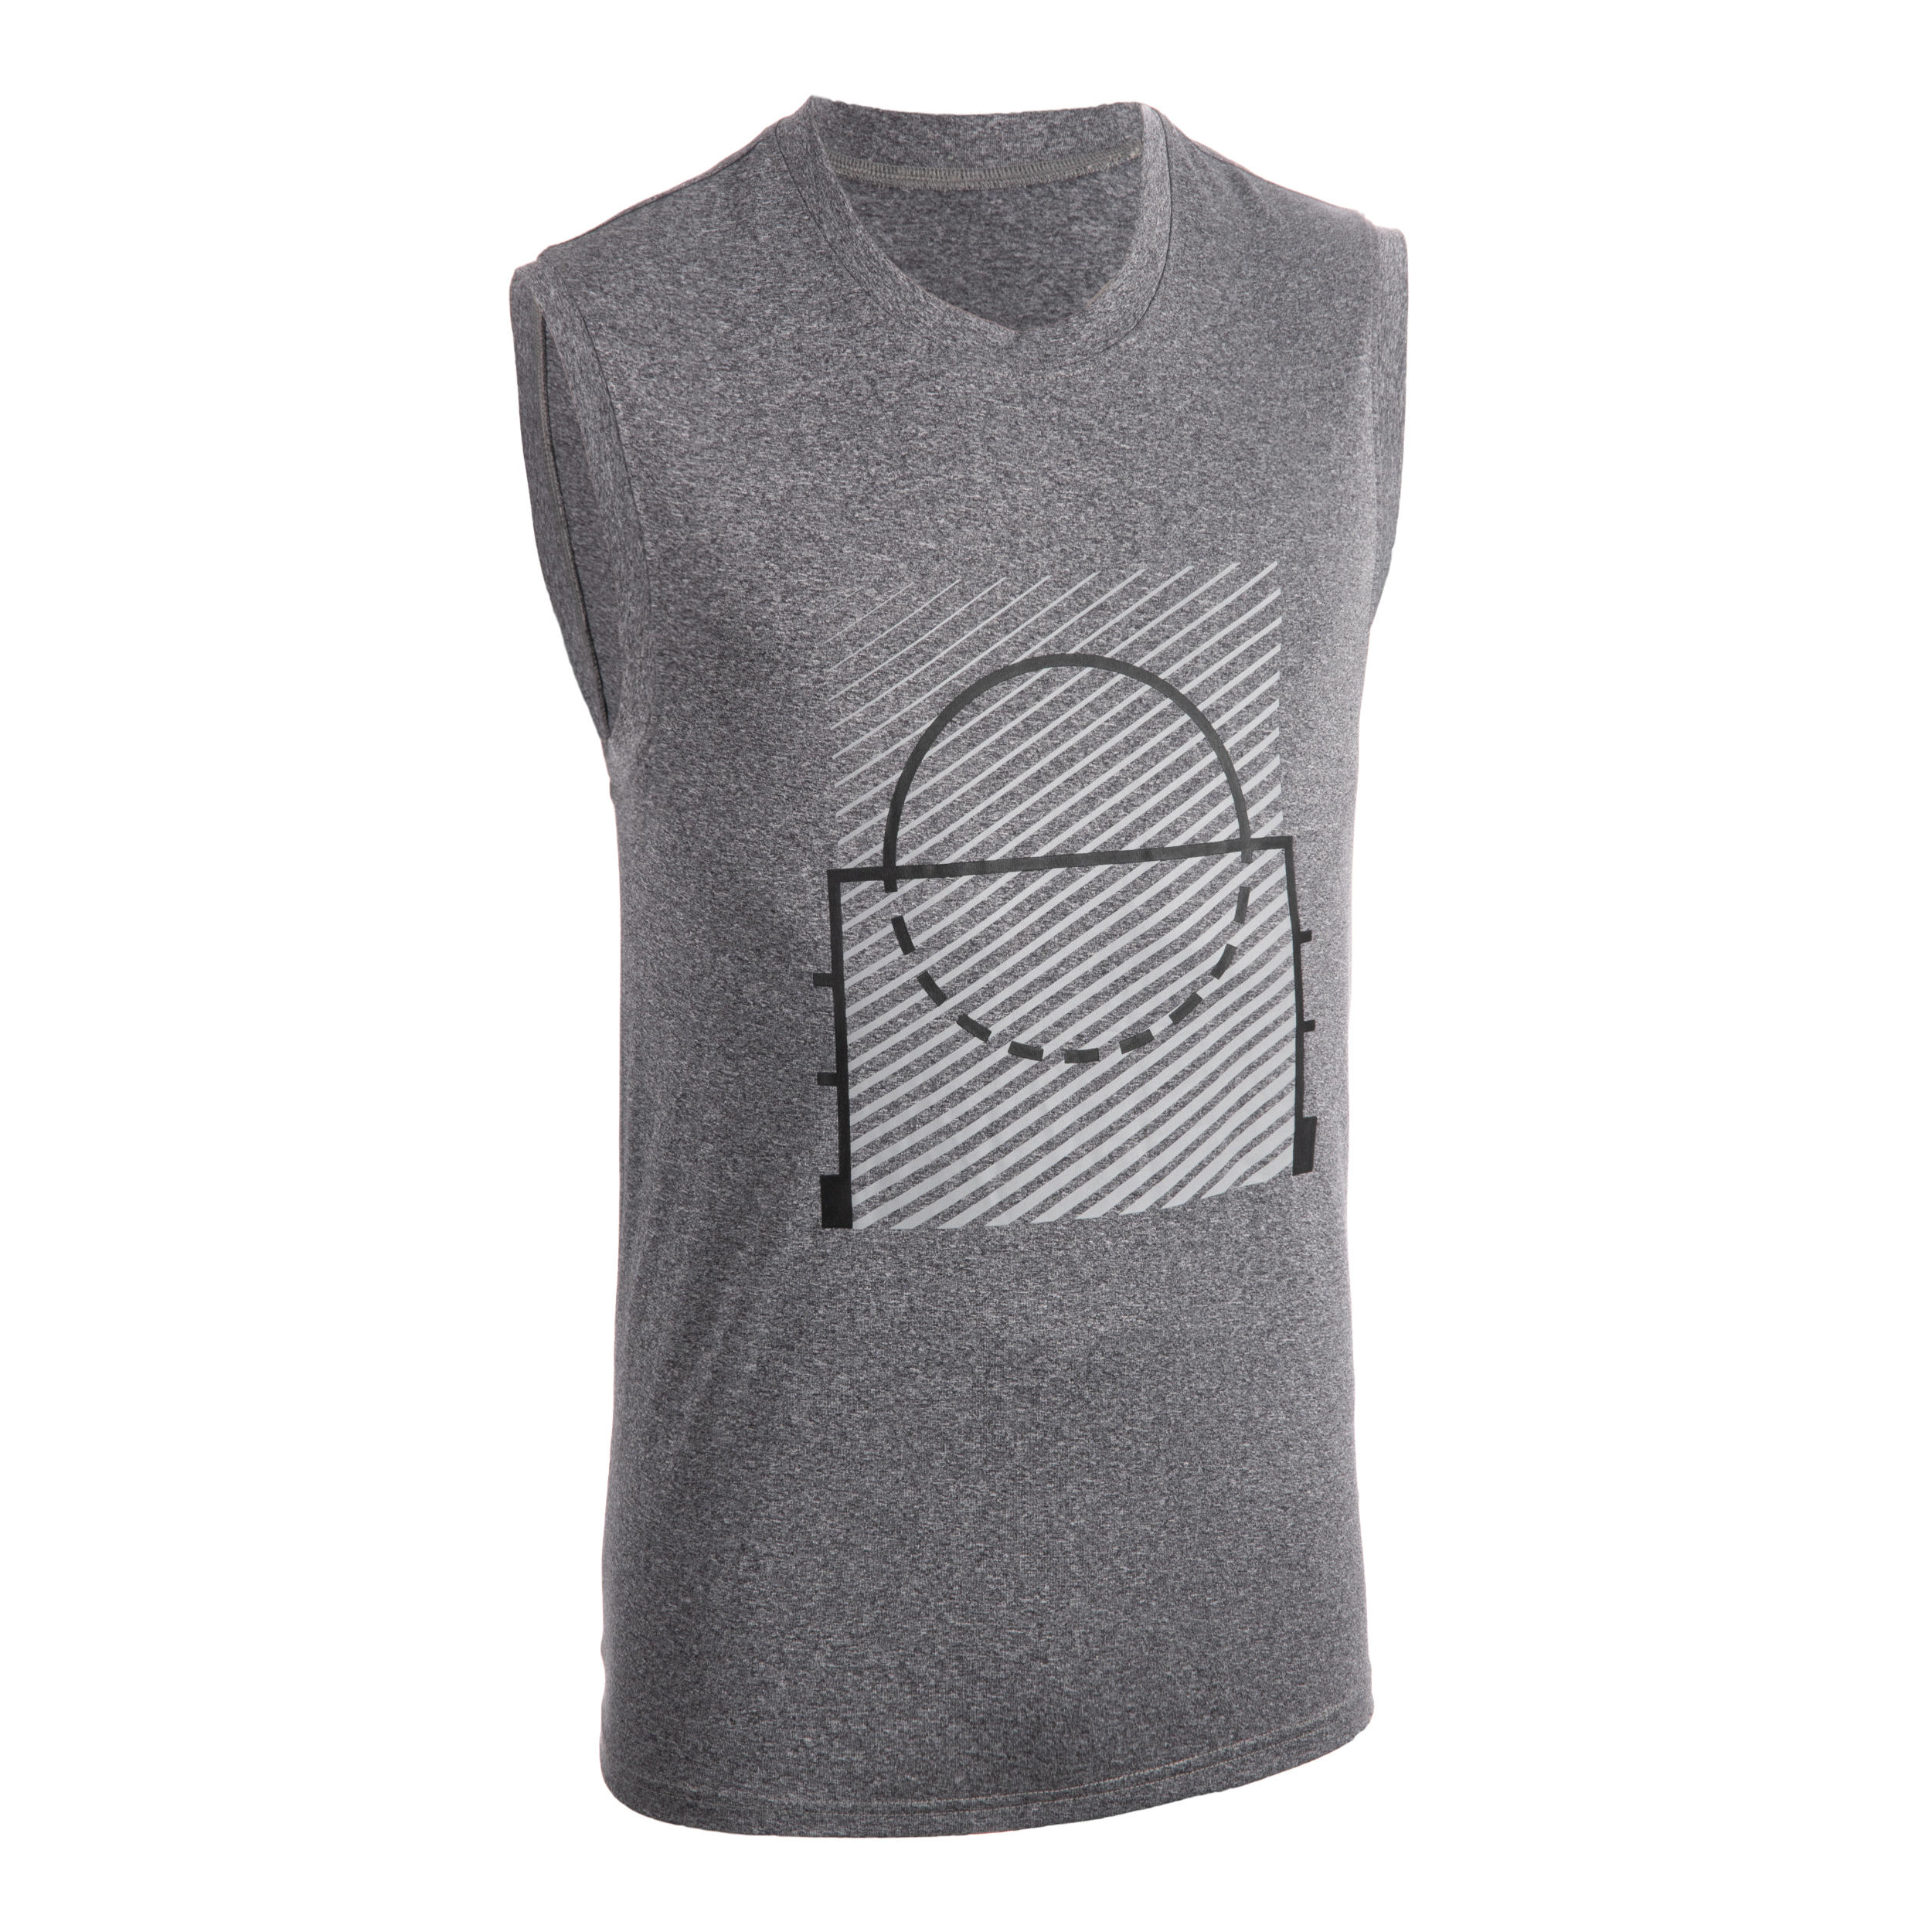 Men's Sleeveless Basketball T-Shirt 